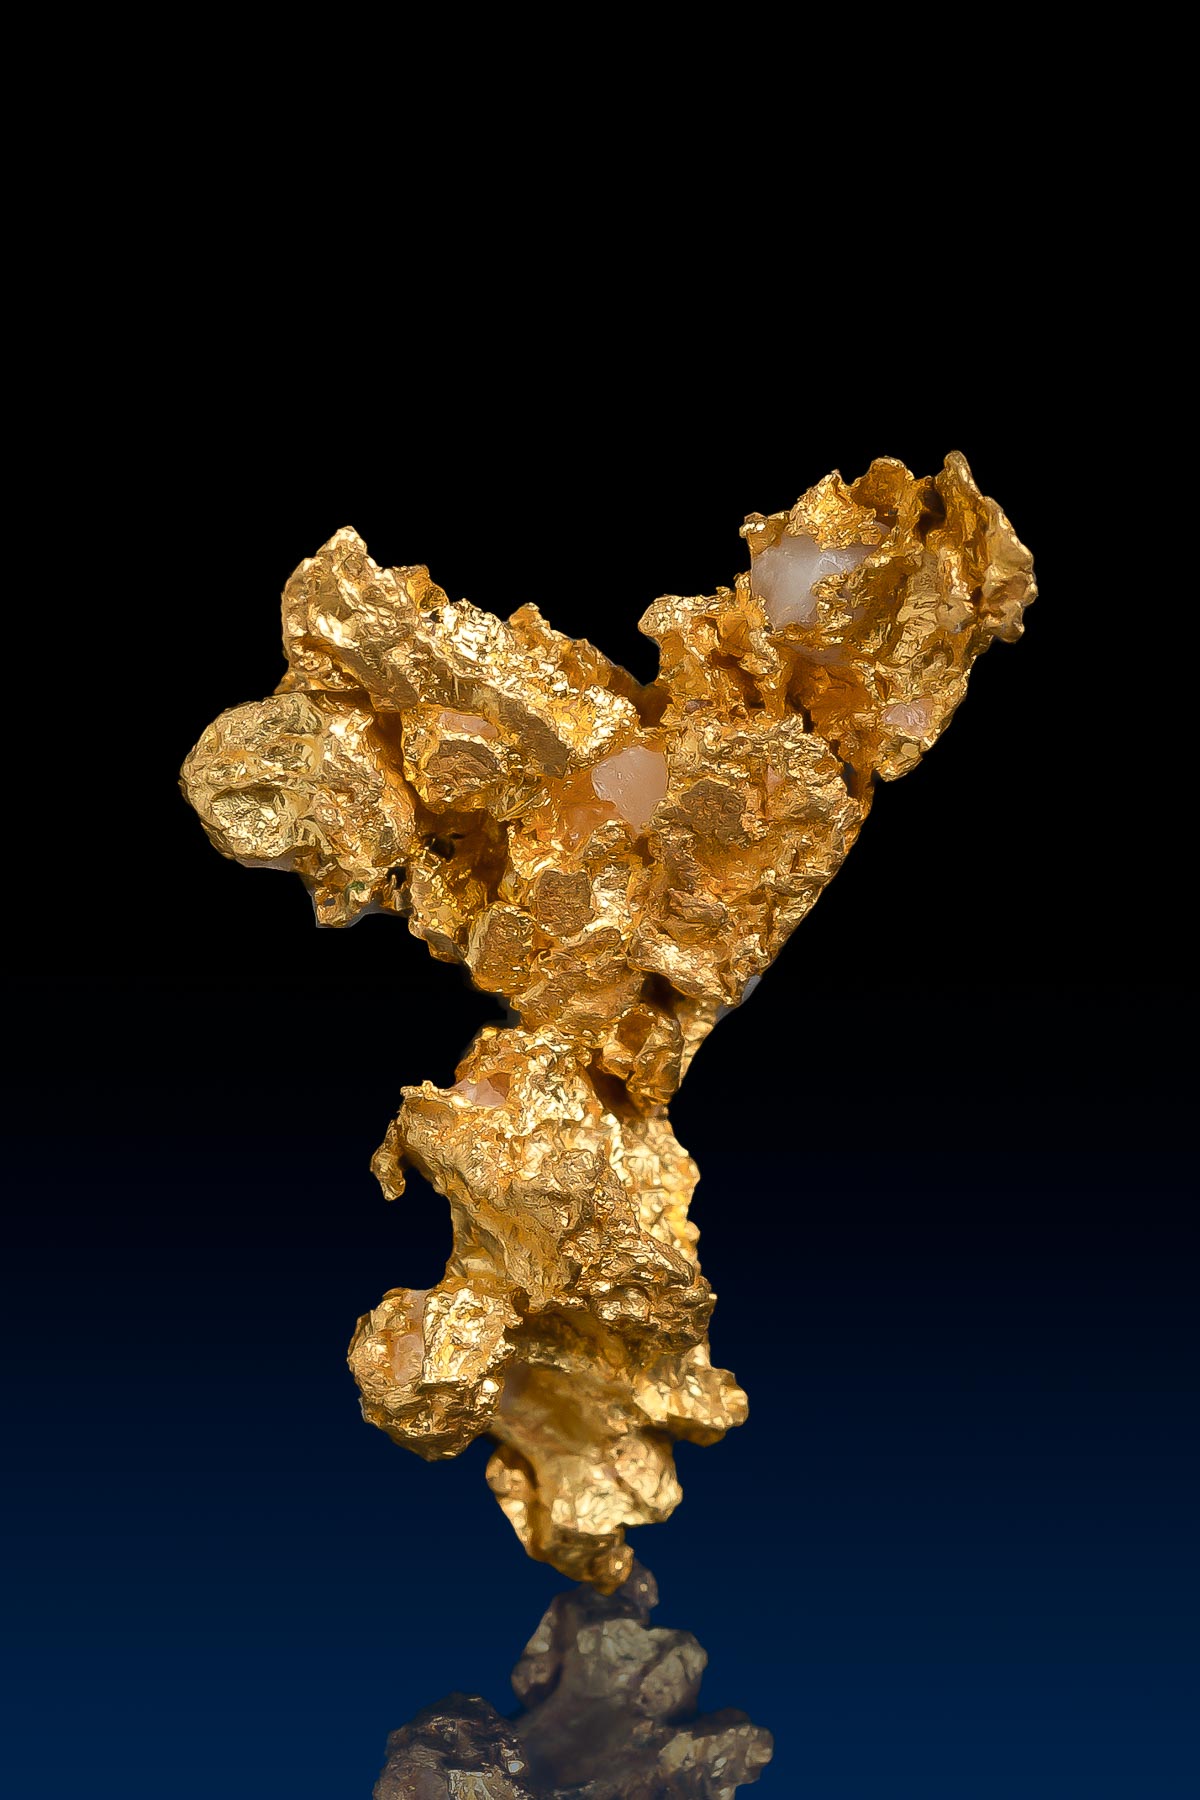 Beautiful Gold Crystal Specimen from Alta Floresta, Brazil